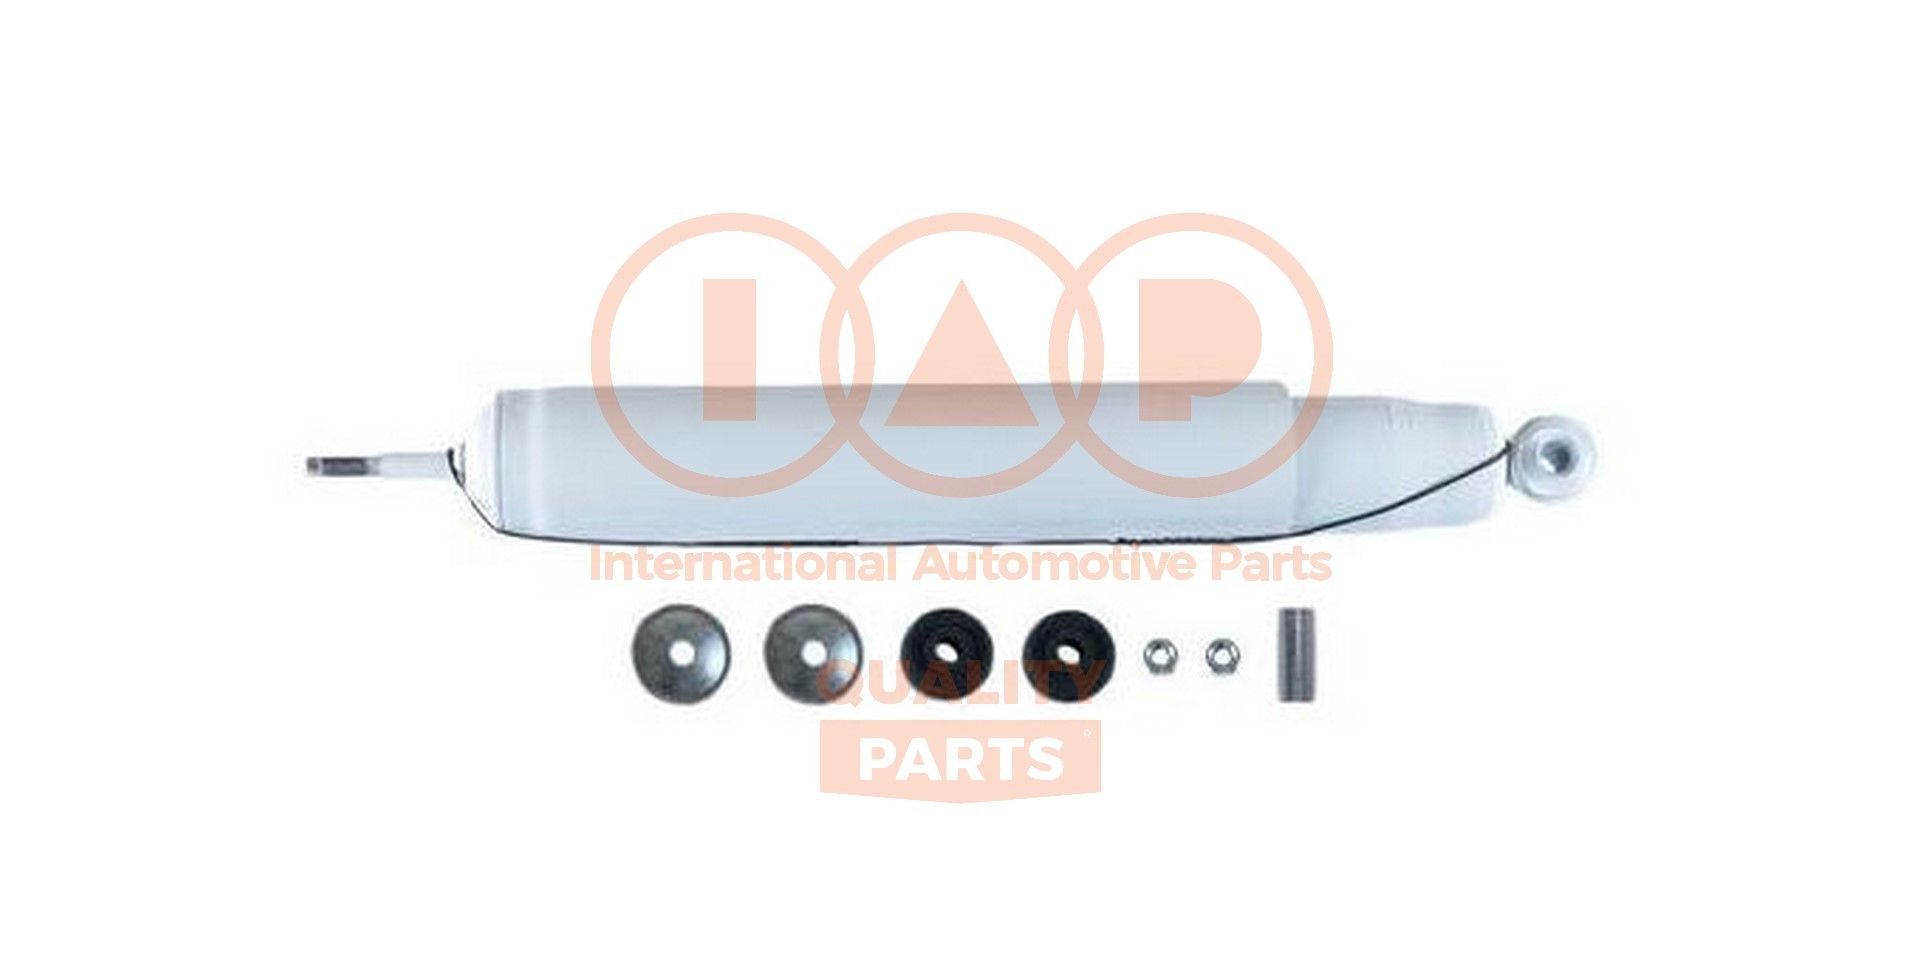 IAP QUALITY PARTS 409-13011K Wheel bearing kit 43215 T3200